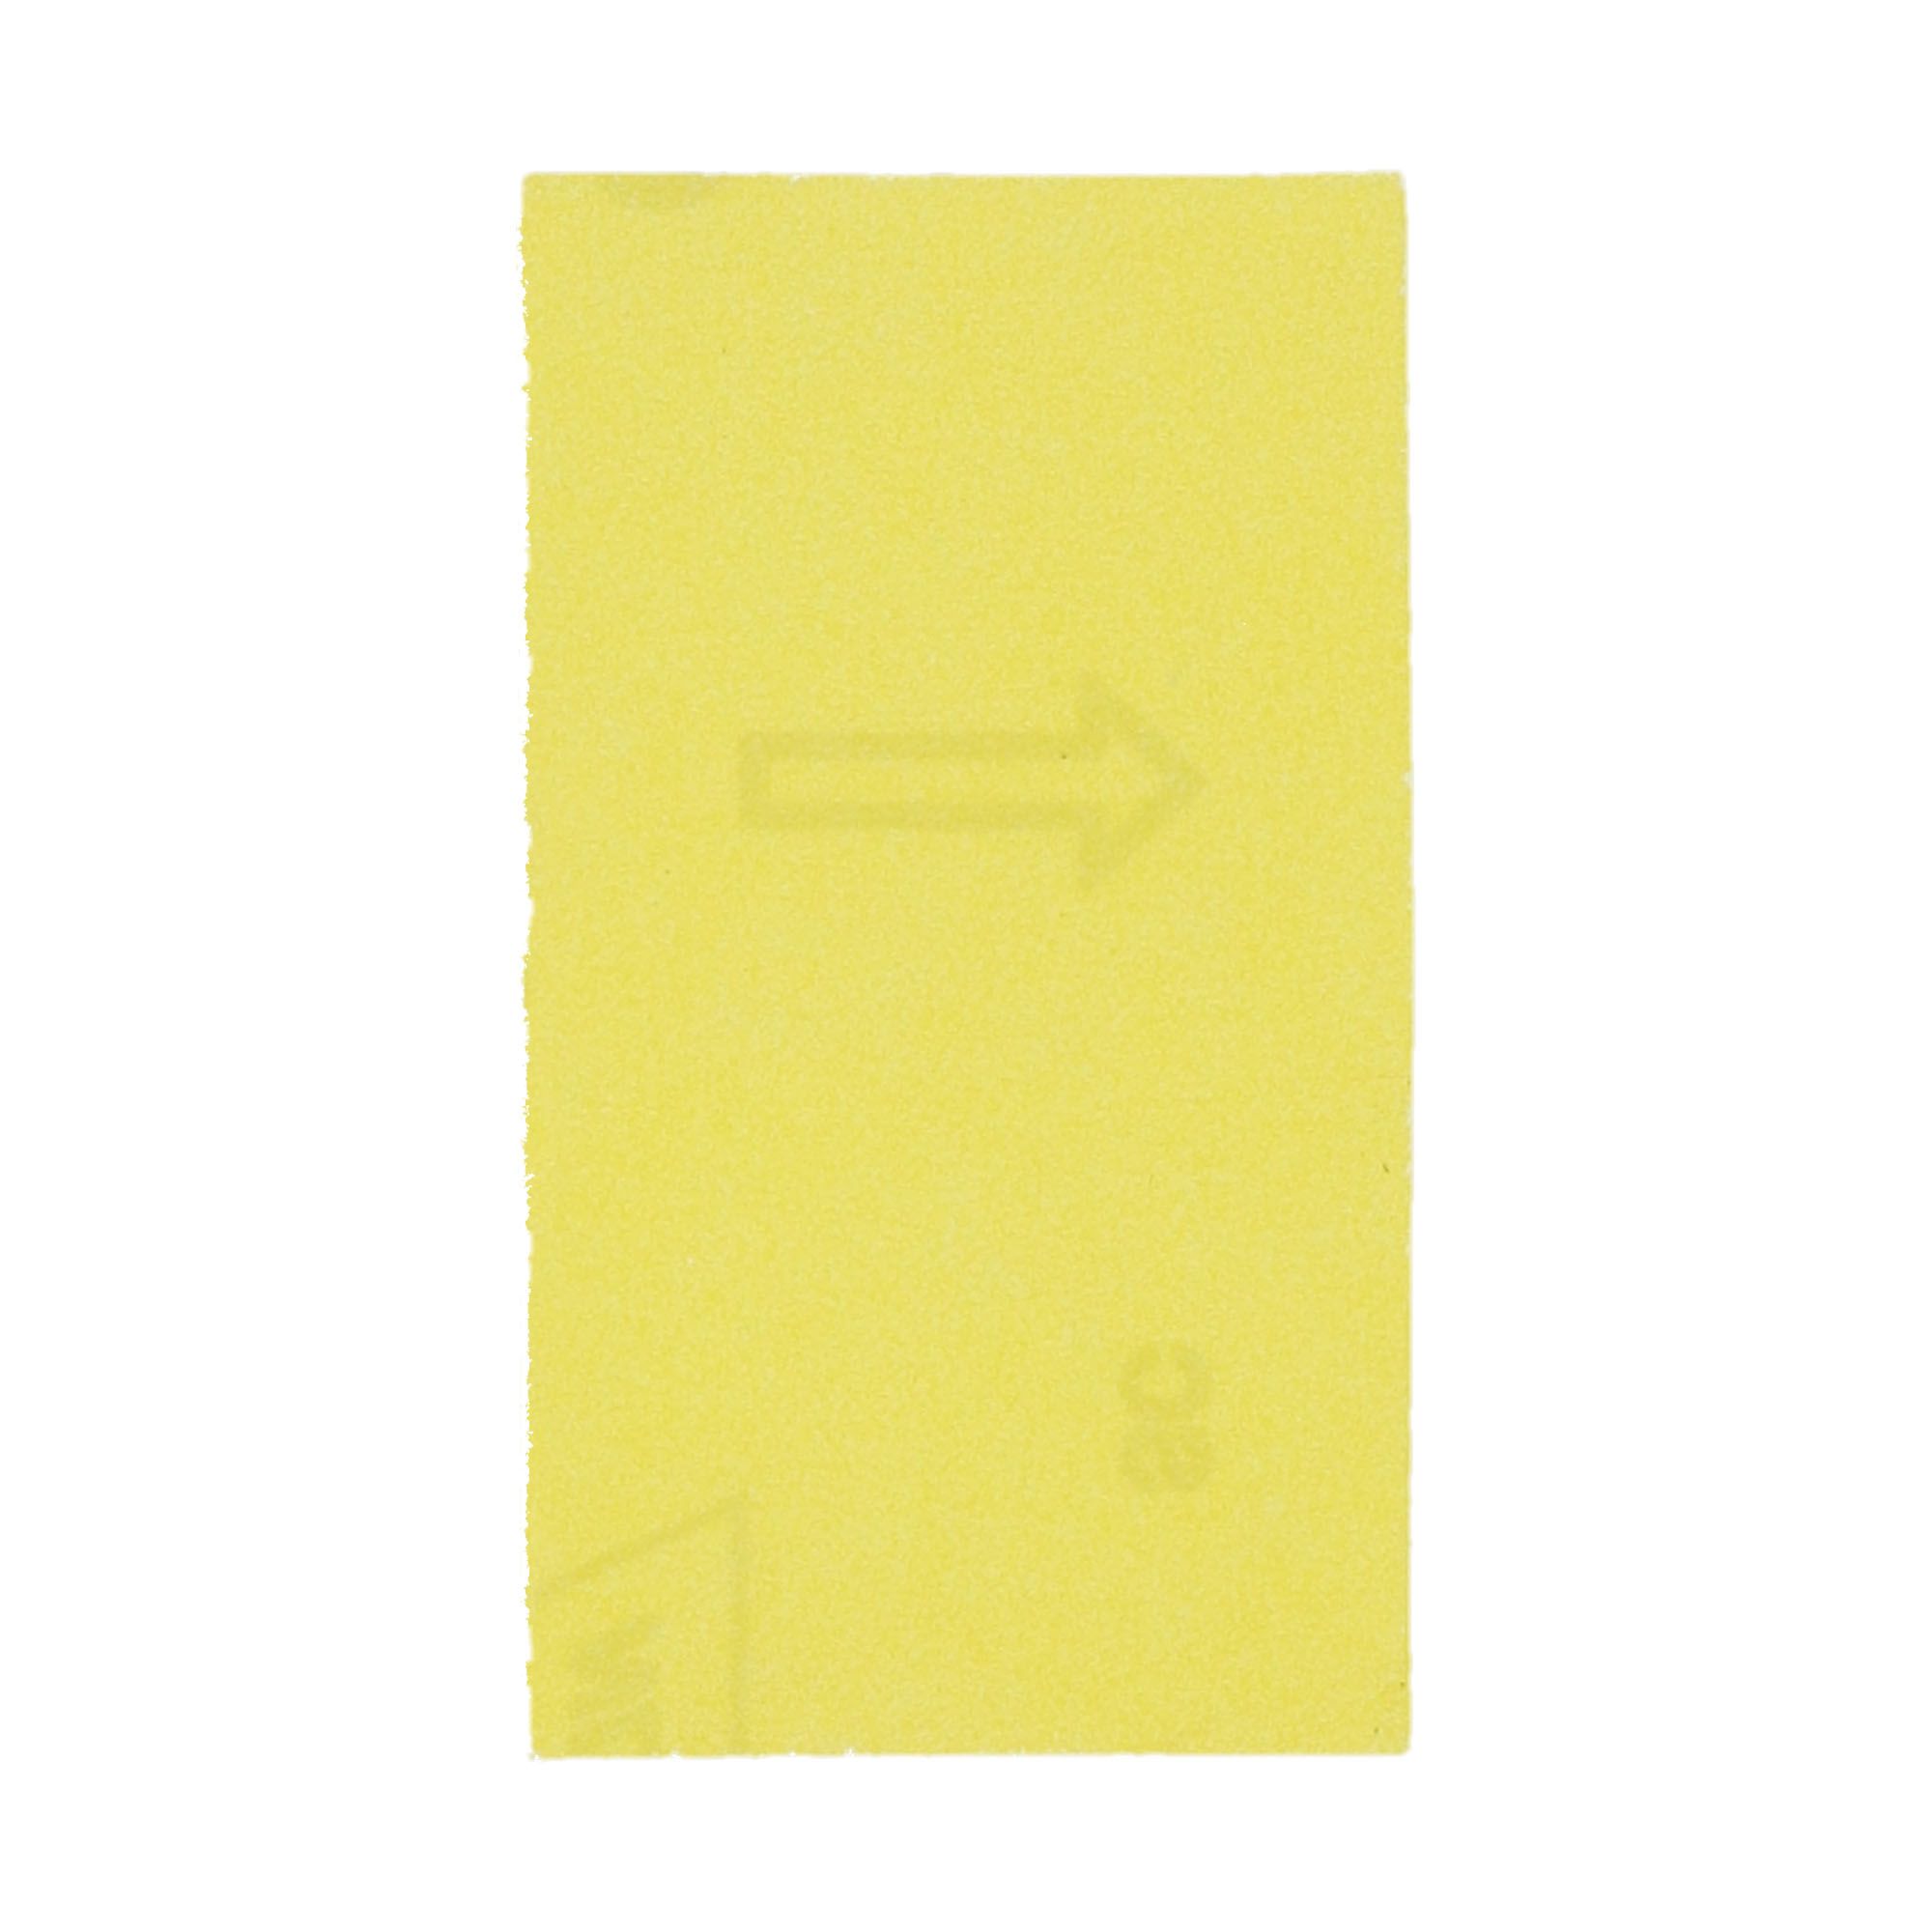 Norton 120 grit Yellow Sanding sheet (L)70mm (W)125mm, Pack of 5